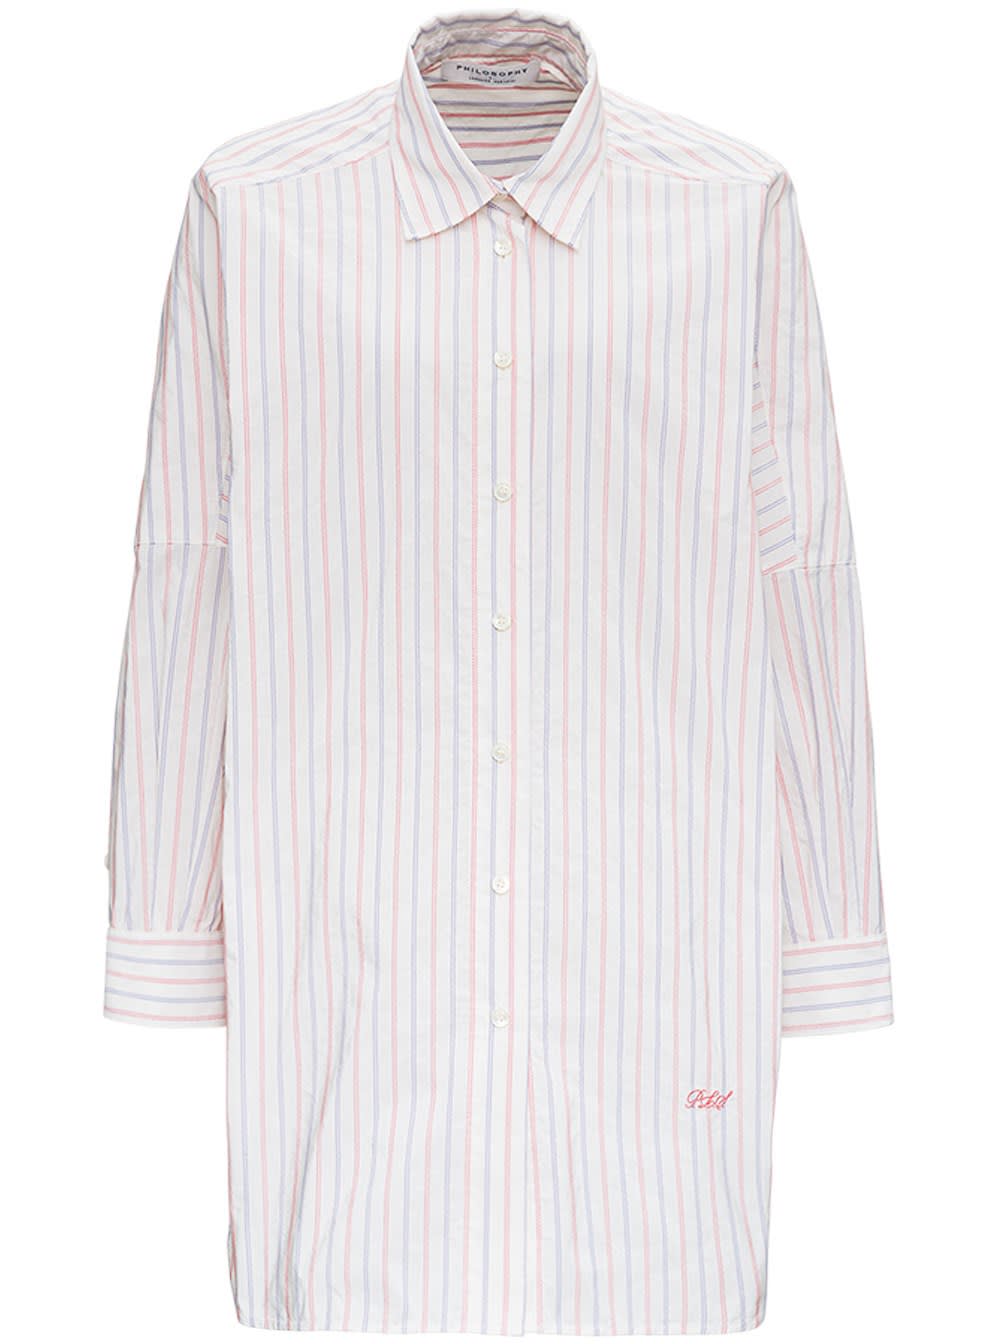 Philosophy di Lorenzo Serafini Oversize Striped Cotton Shirt With Logo